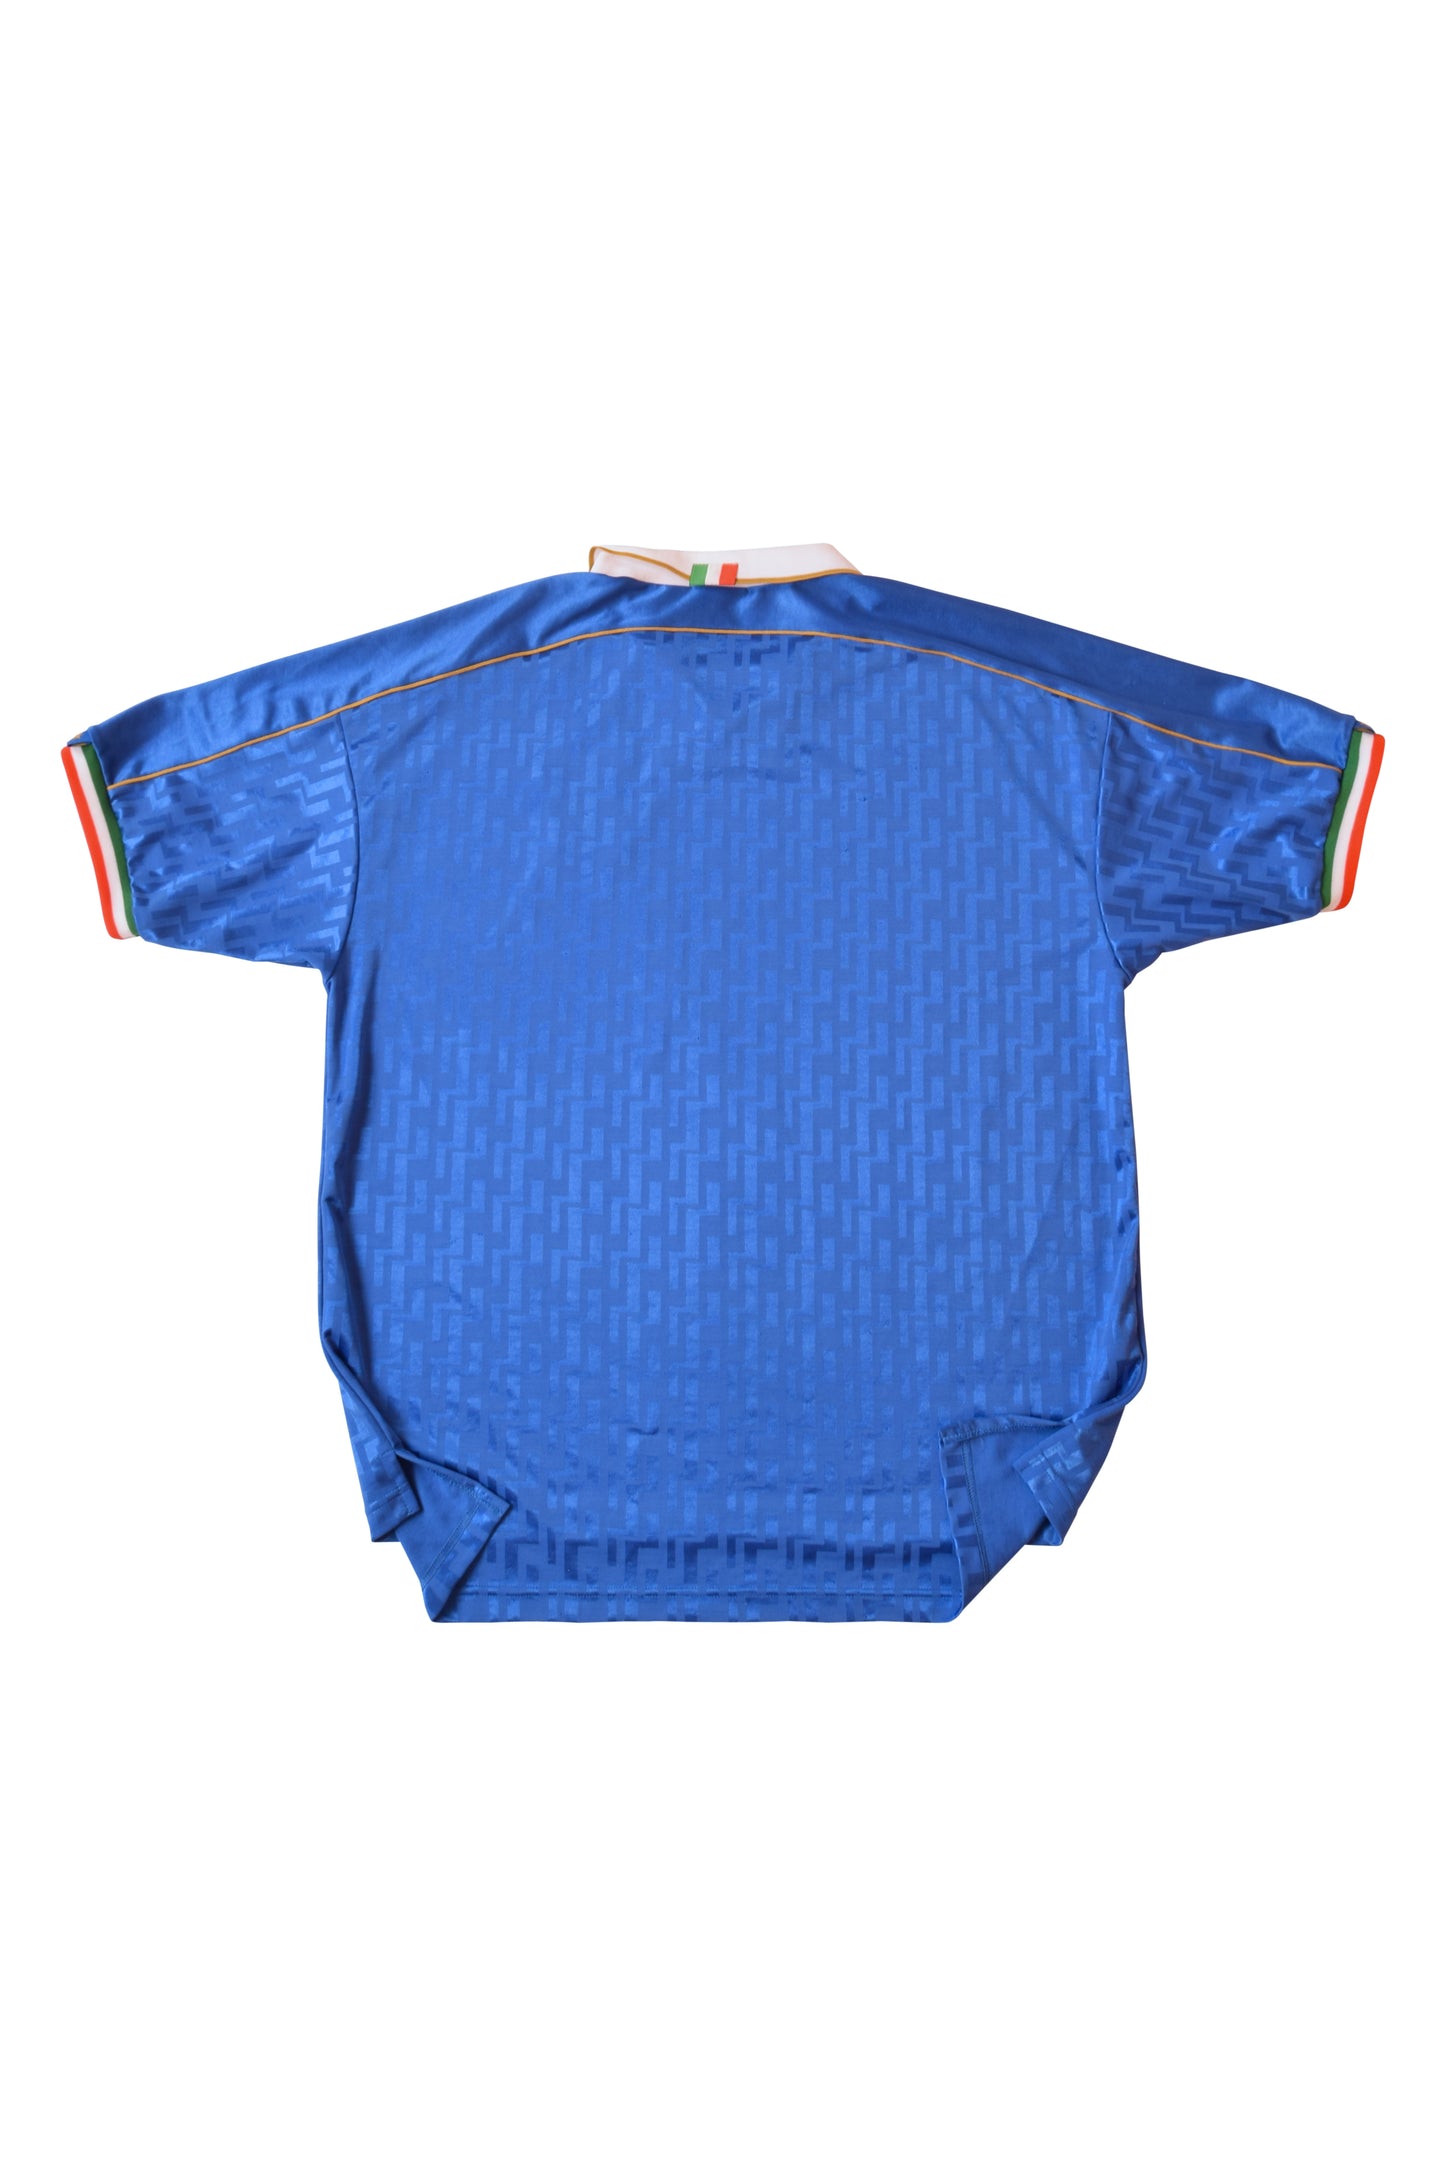 Vintage Nike Premier Italy Football Shirt '94-'96 Size XXL 